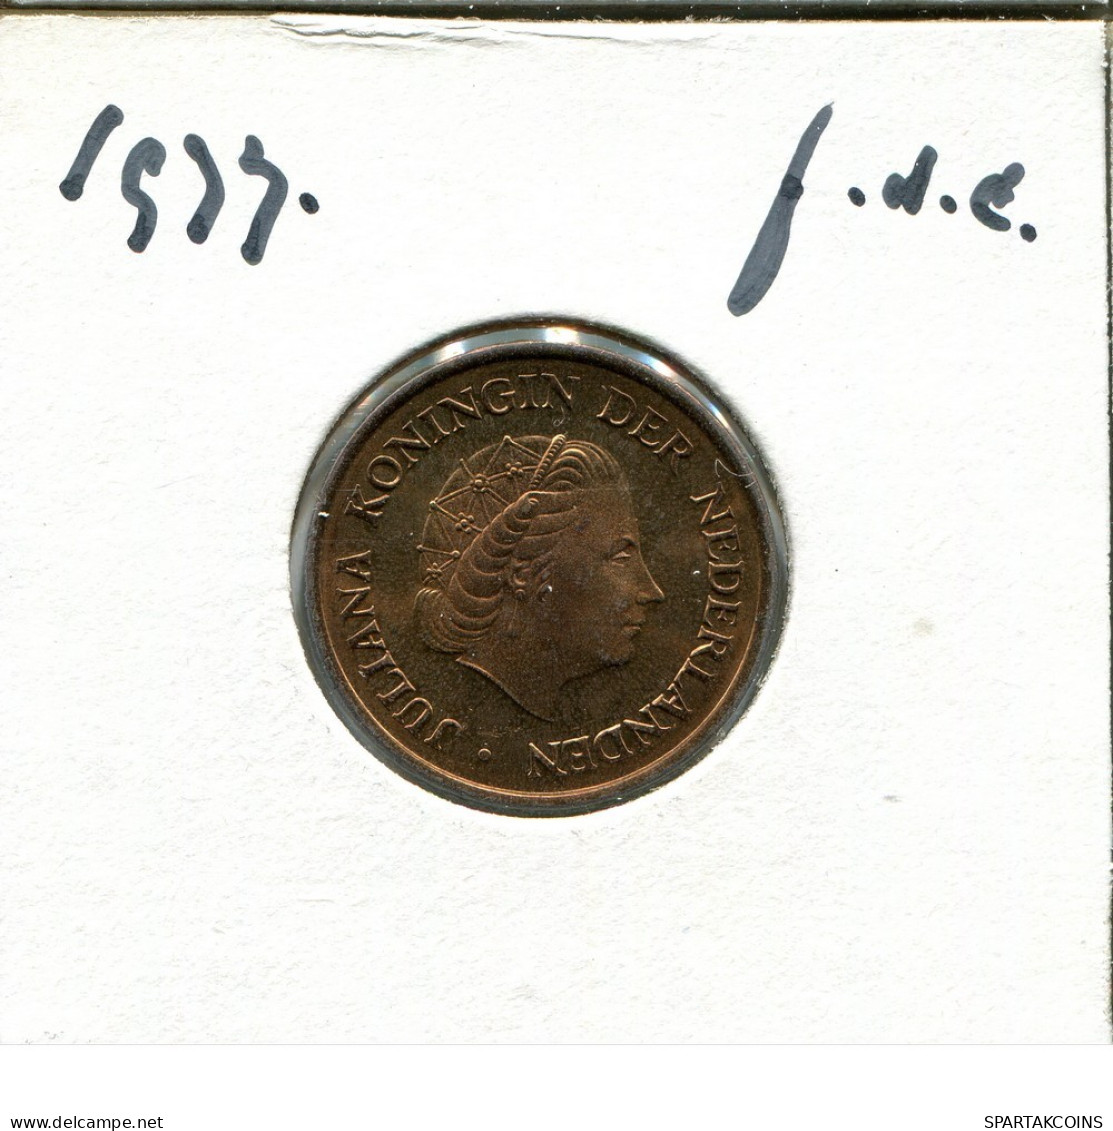 5 CENTS 1977 NETHERLANDS Coin #AU438.U.A - 1948-1980 : Juliana